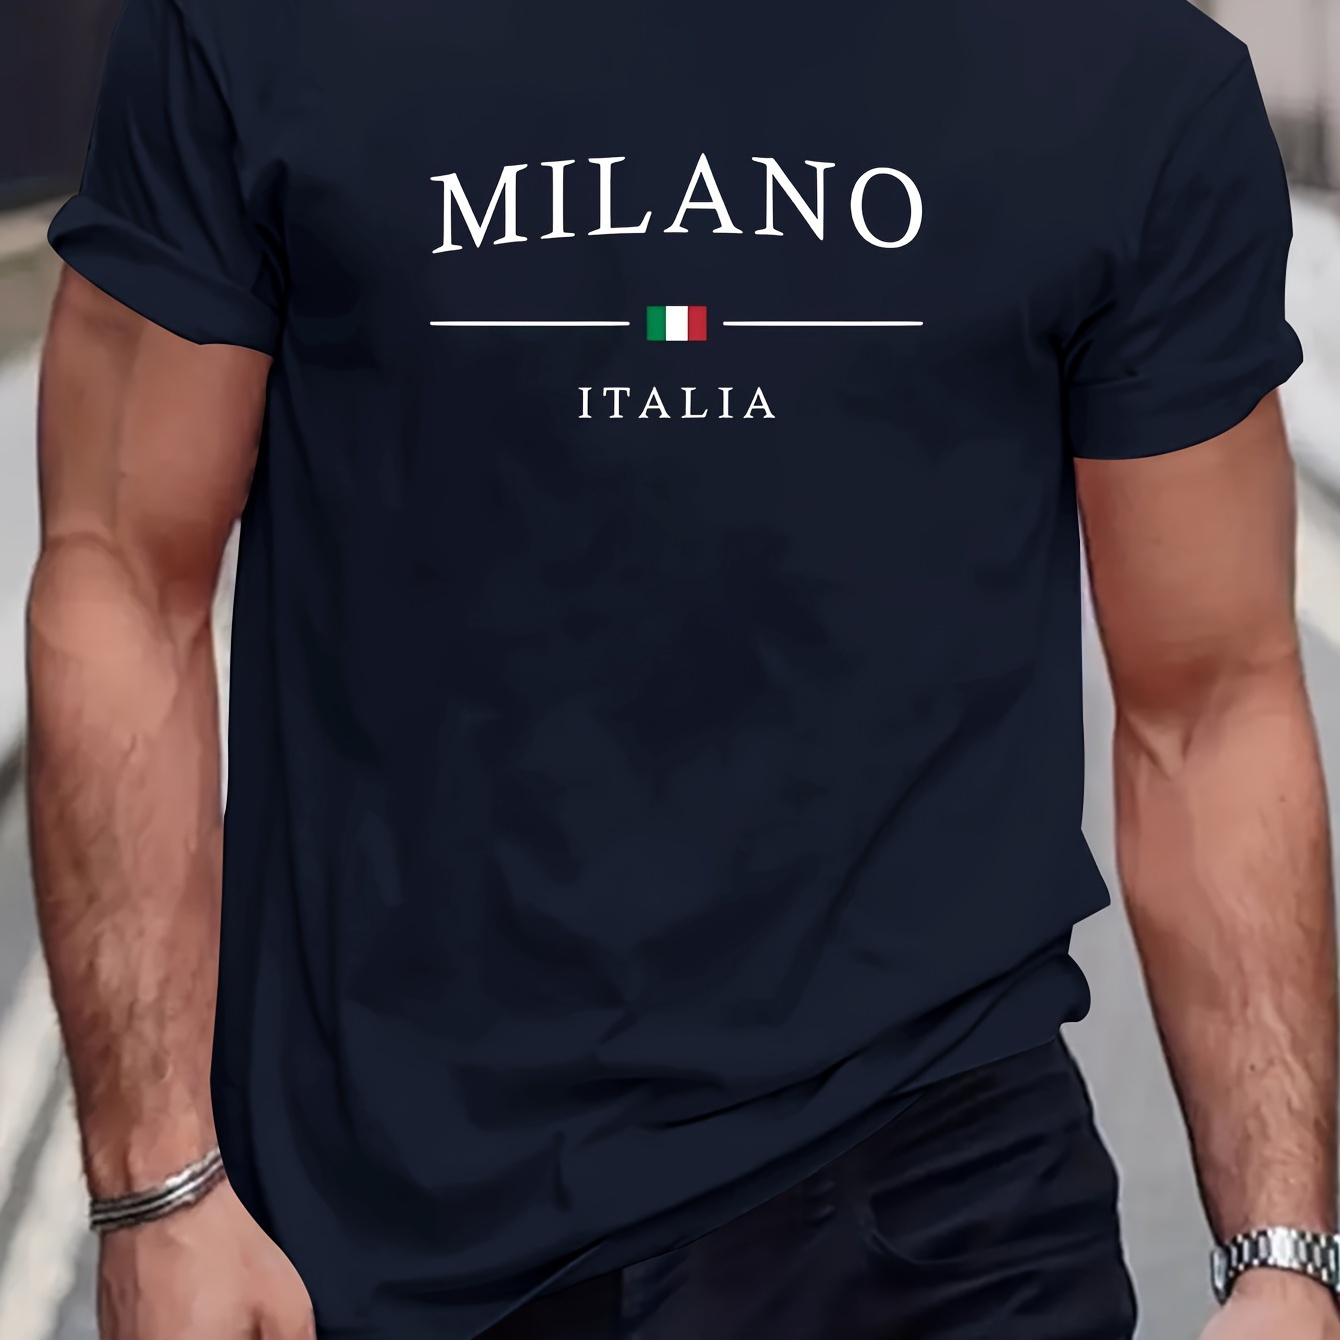 

Milano" Fancy Print Men's T-shirt, Comfortable Elastic Round Neck Tee, Ideal For Summer Outdoor Activities, Stylish Streetwear, Casual Top For Men